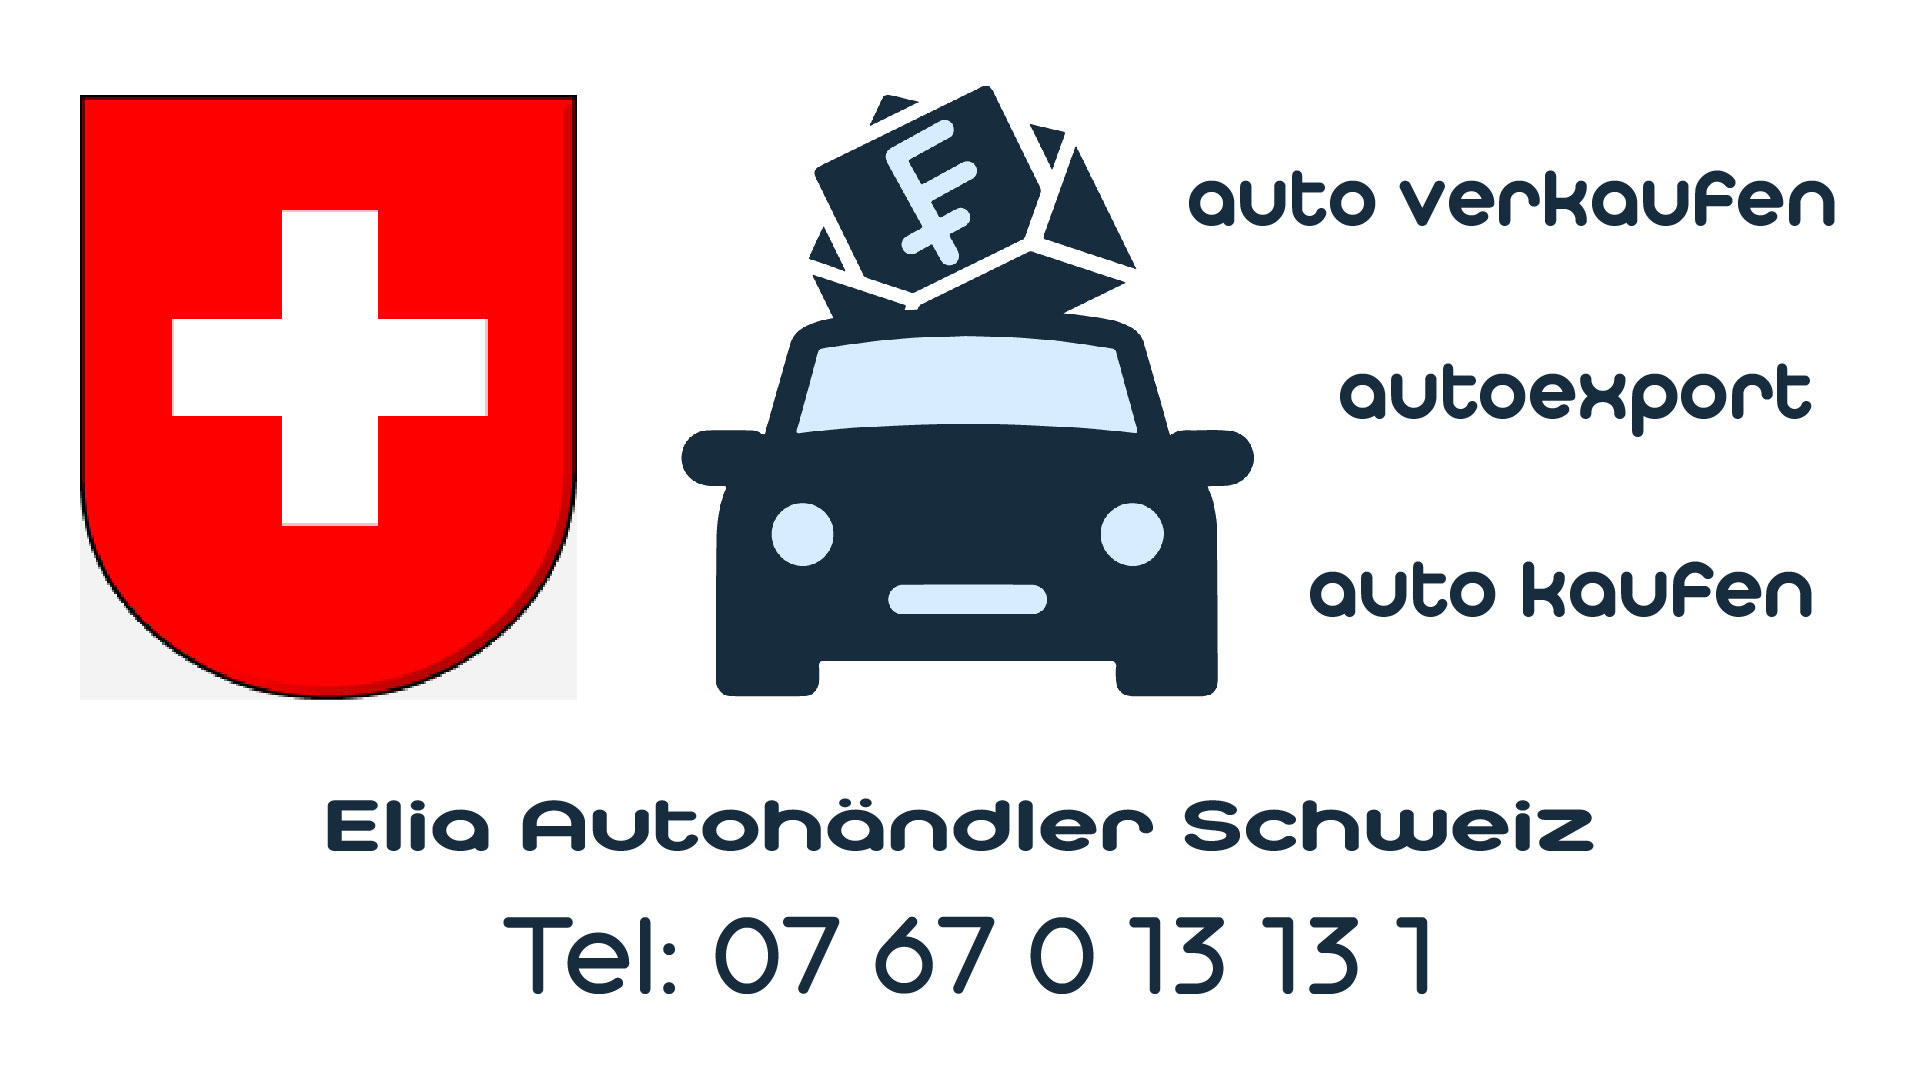 (c) Elia-autohandler.ch